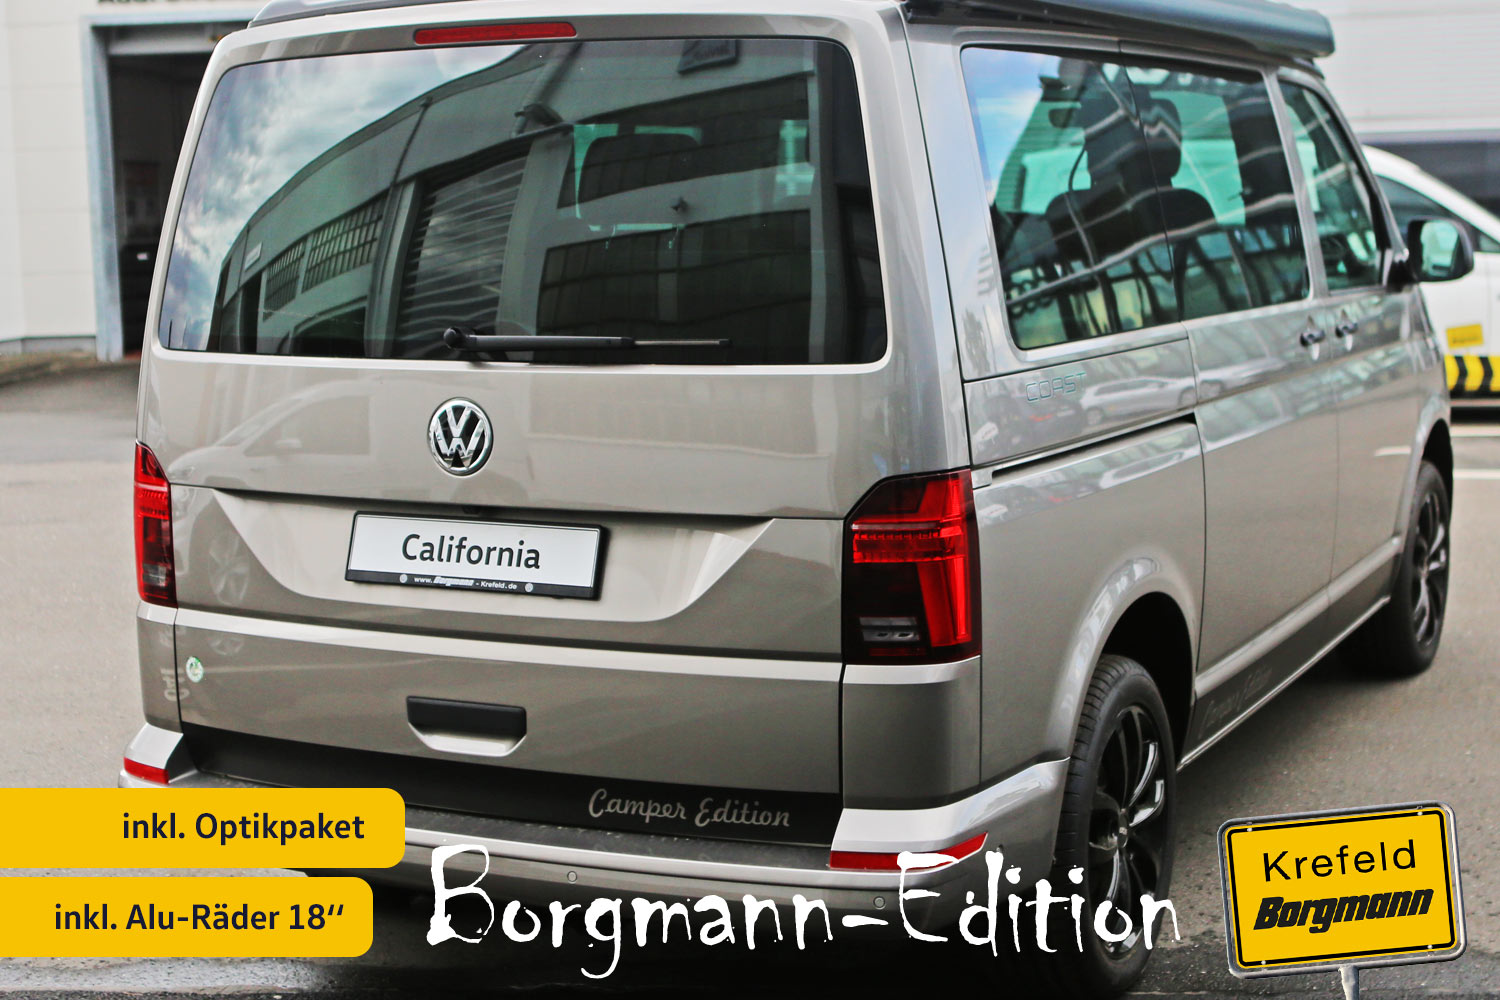 VW California Borgmann Edition 2022